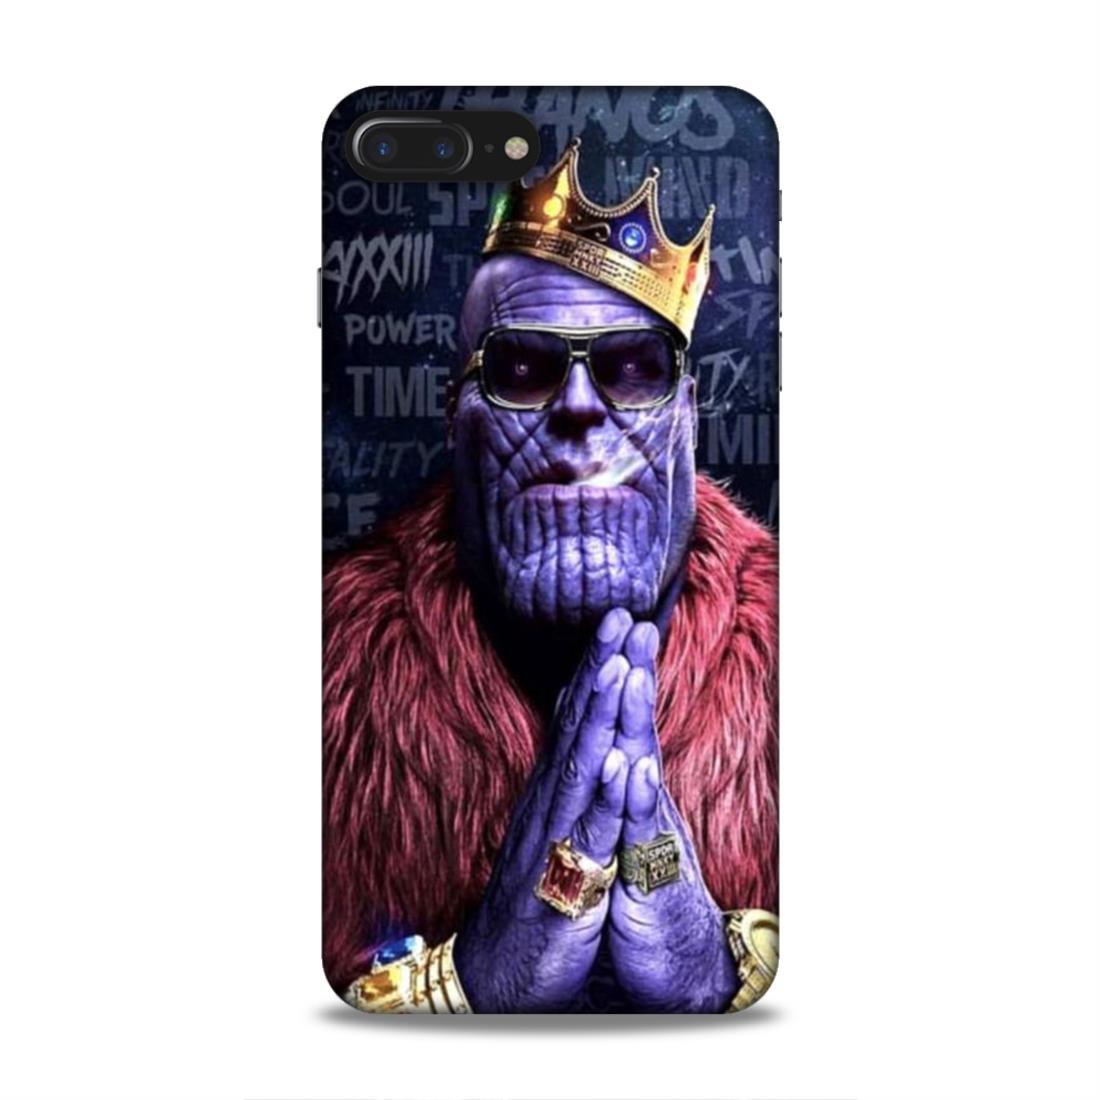 Thanoss Fanart iPhone 8 Plus Phone Back Cover